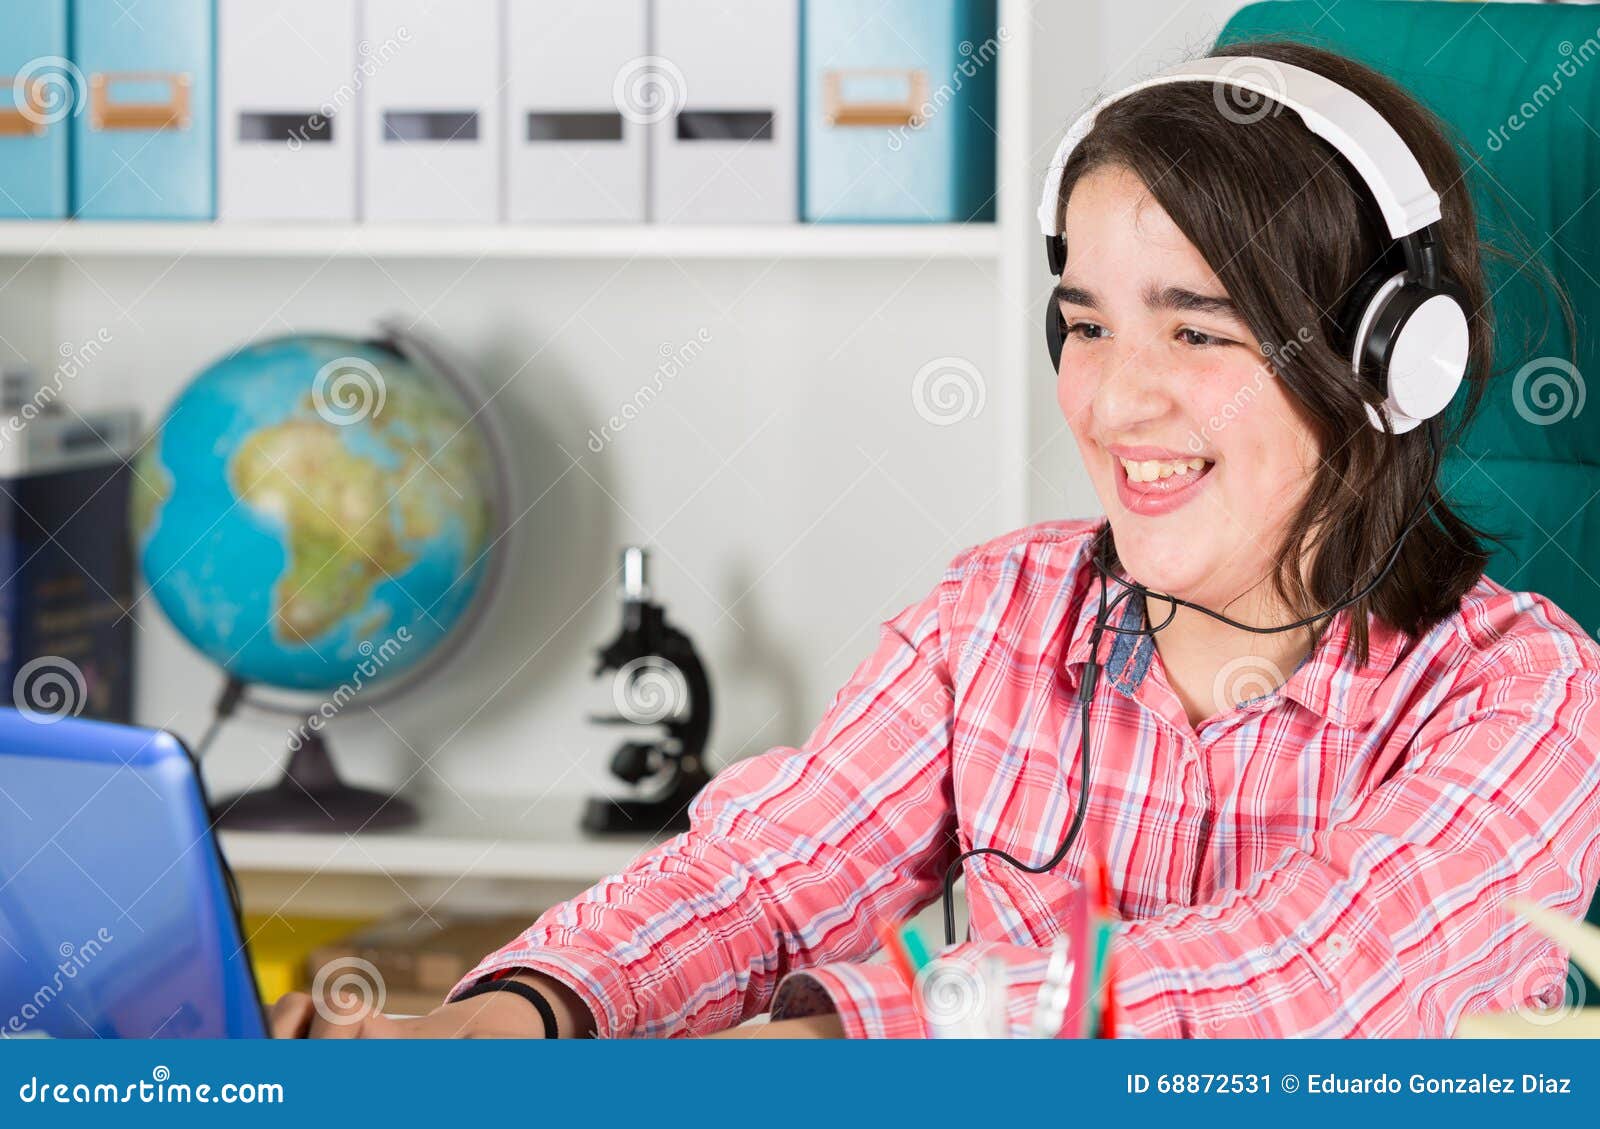 teenage girl studying at home